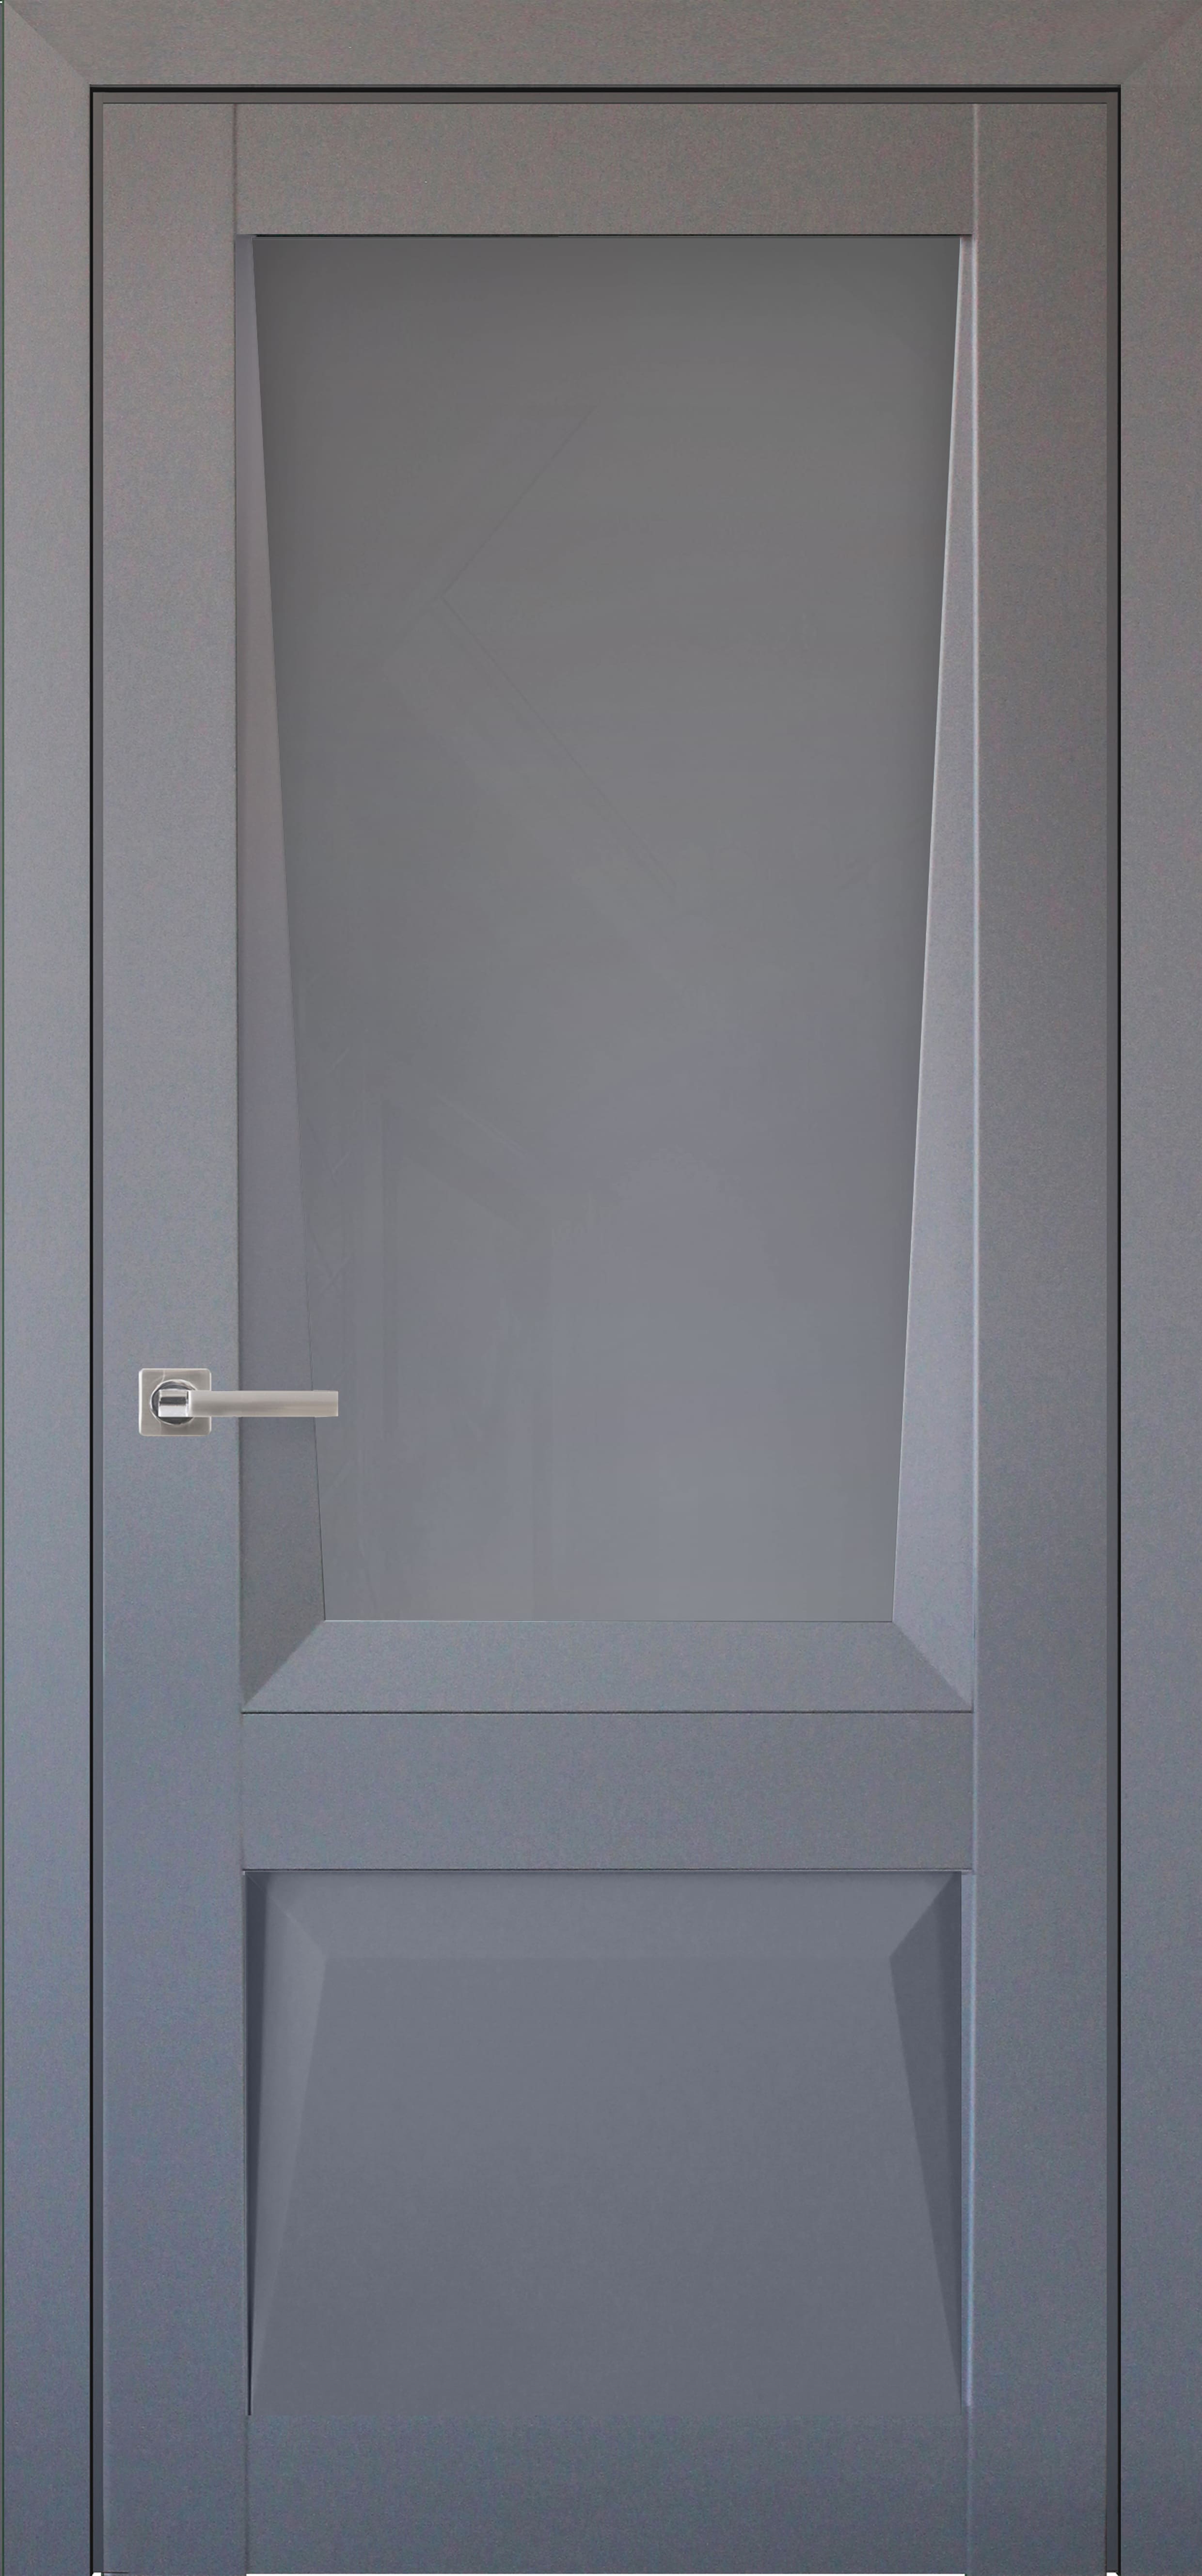 Дверь межкомнатная экошпон soft-touch Перфекто м.106 бархат серый остеклённая (лакобель серый)